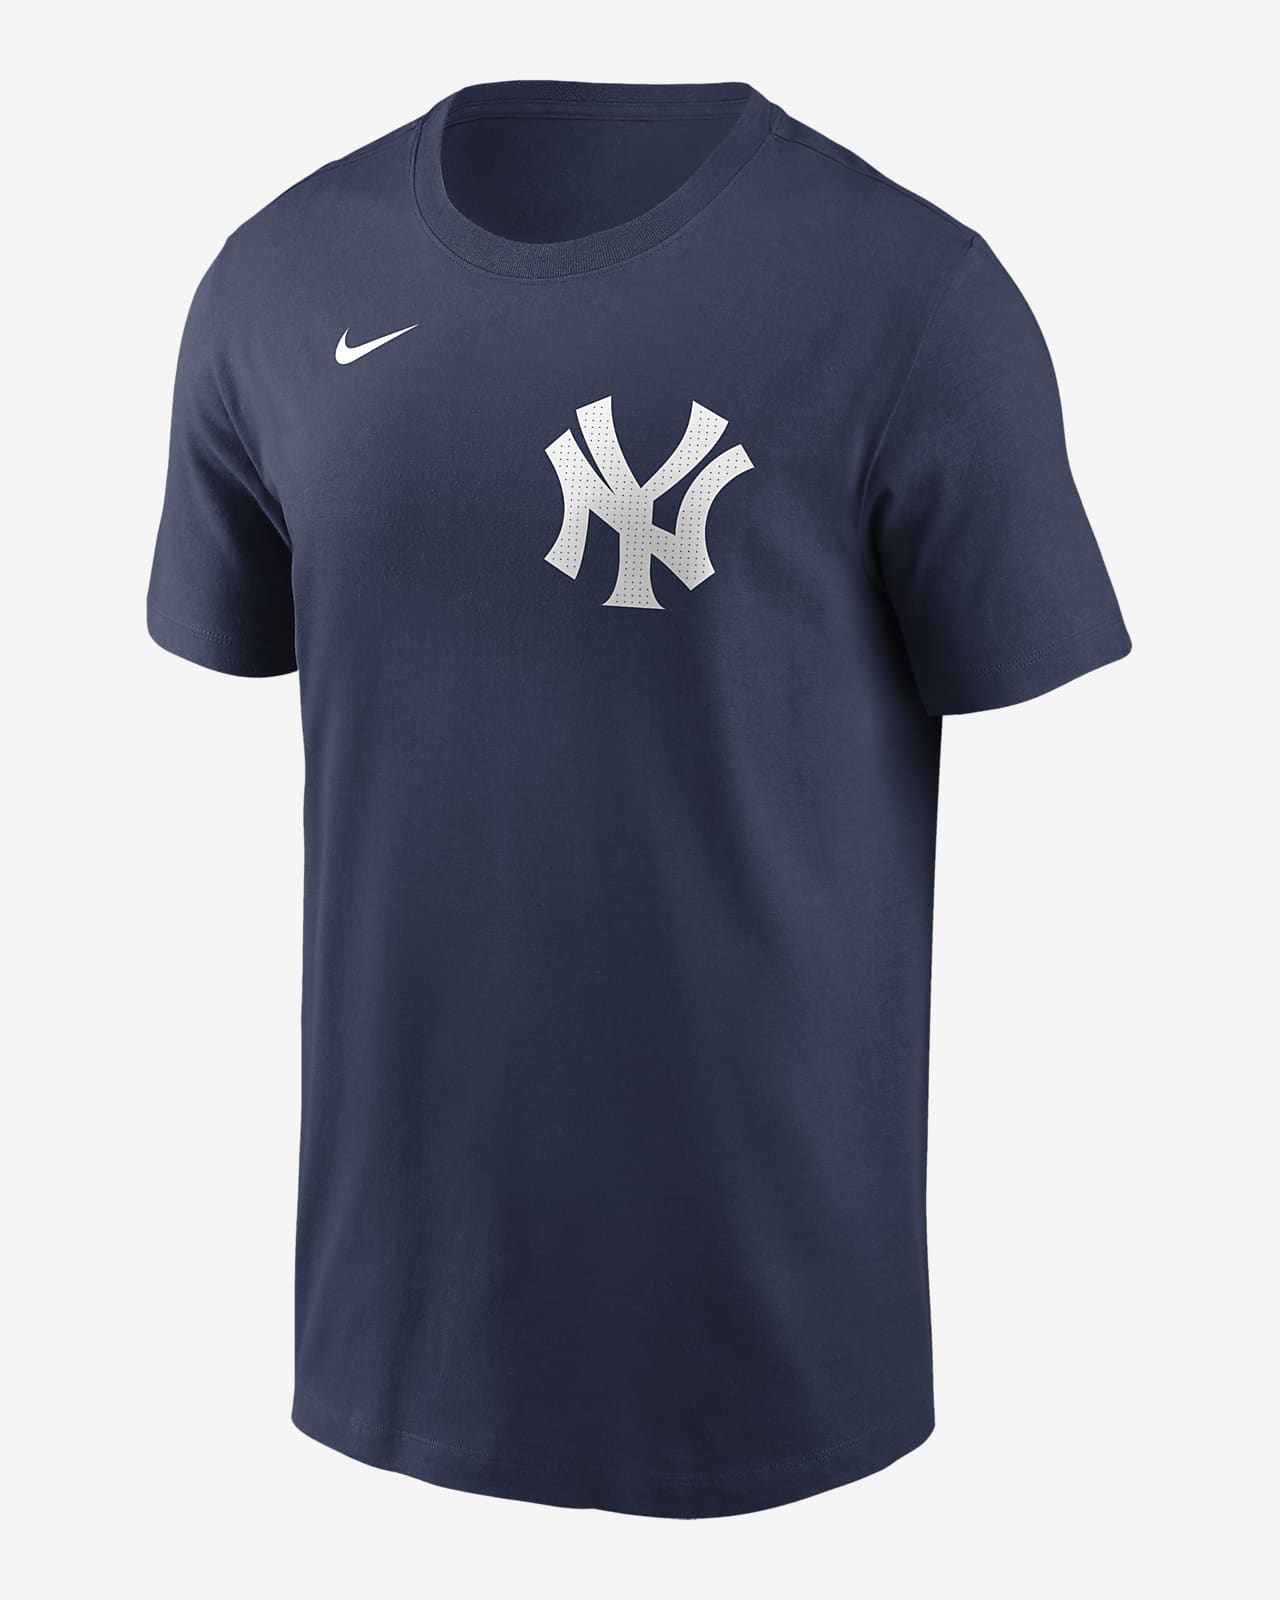 Aaron Judge New York Yankees Fuse Men's Nike MLB T-Shirt